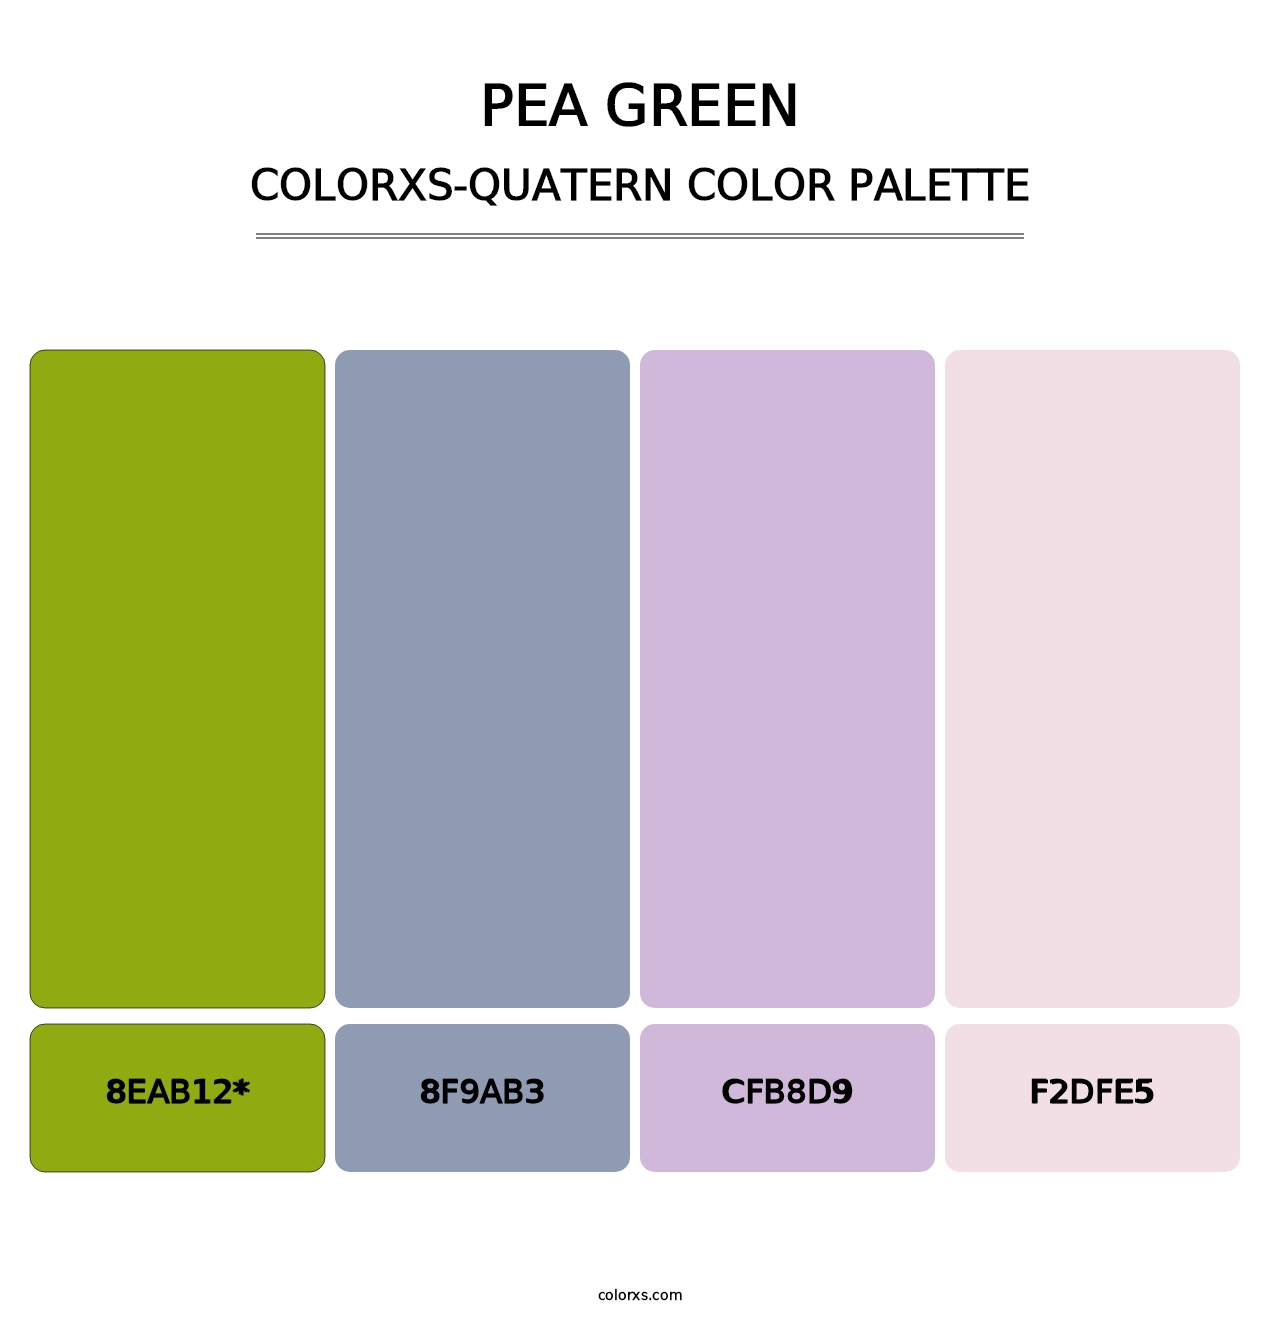 Pea Green - Colorxs Quatern Palette